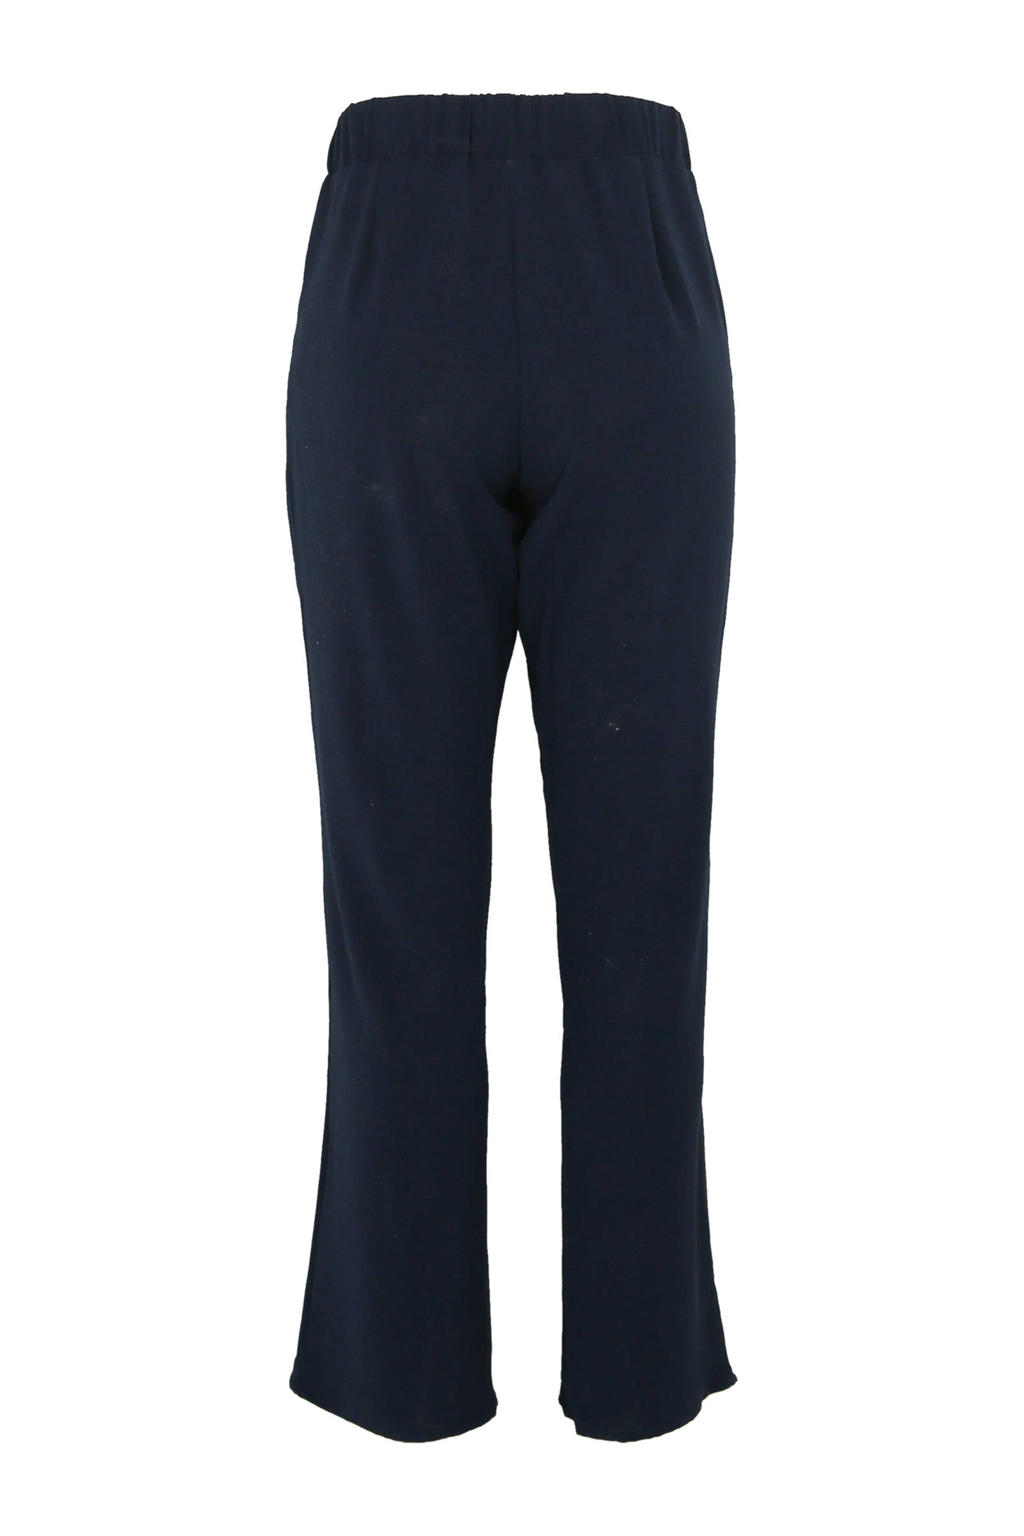 Donkerblauwe dames Paprika flared broek van polyester met regular waist en elastische tailleband